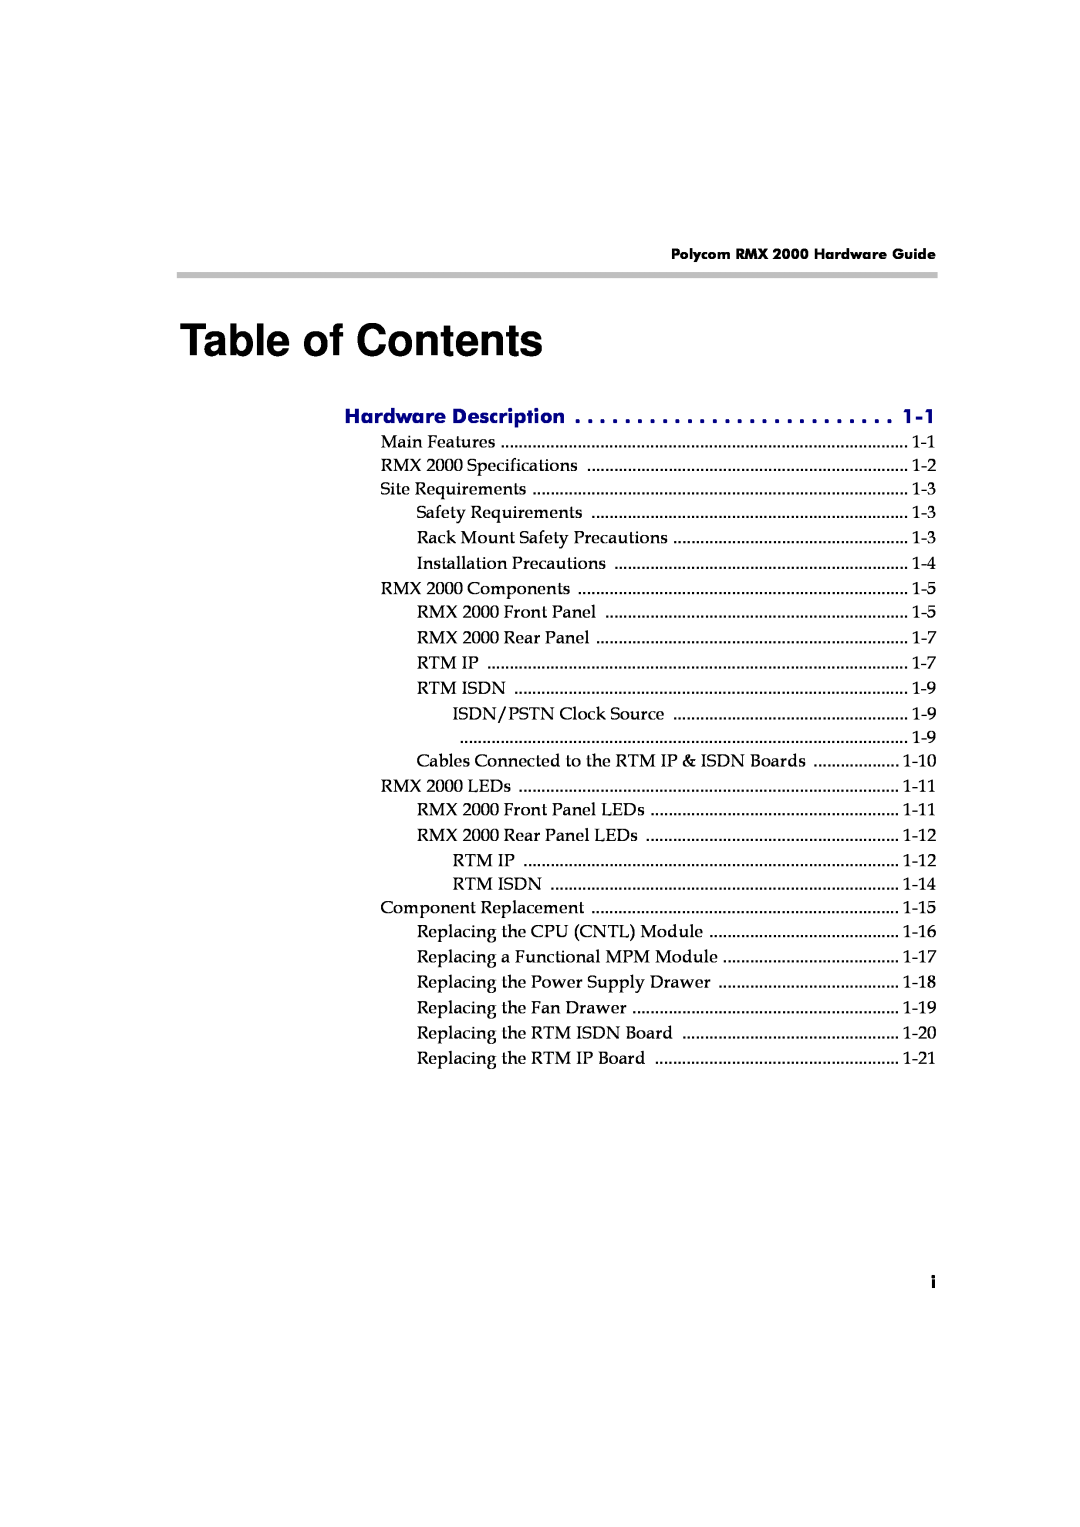 Polycom RMX 2000 manual Table of Contents, Hardware Description 